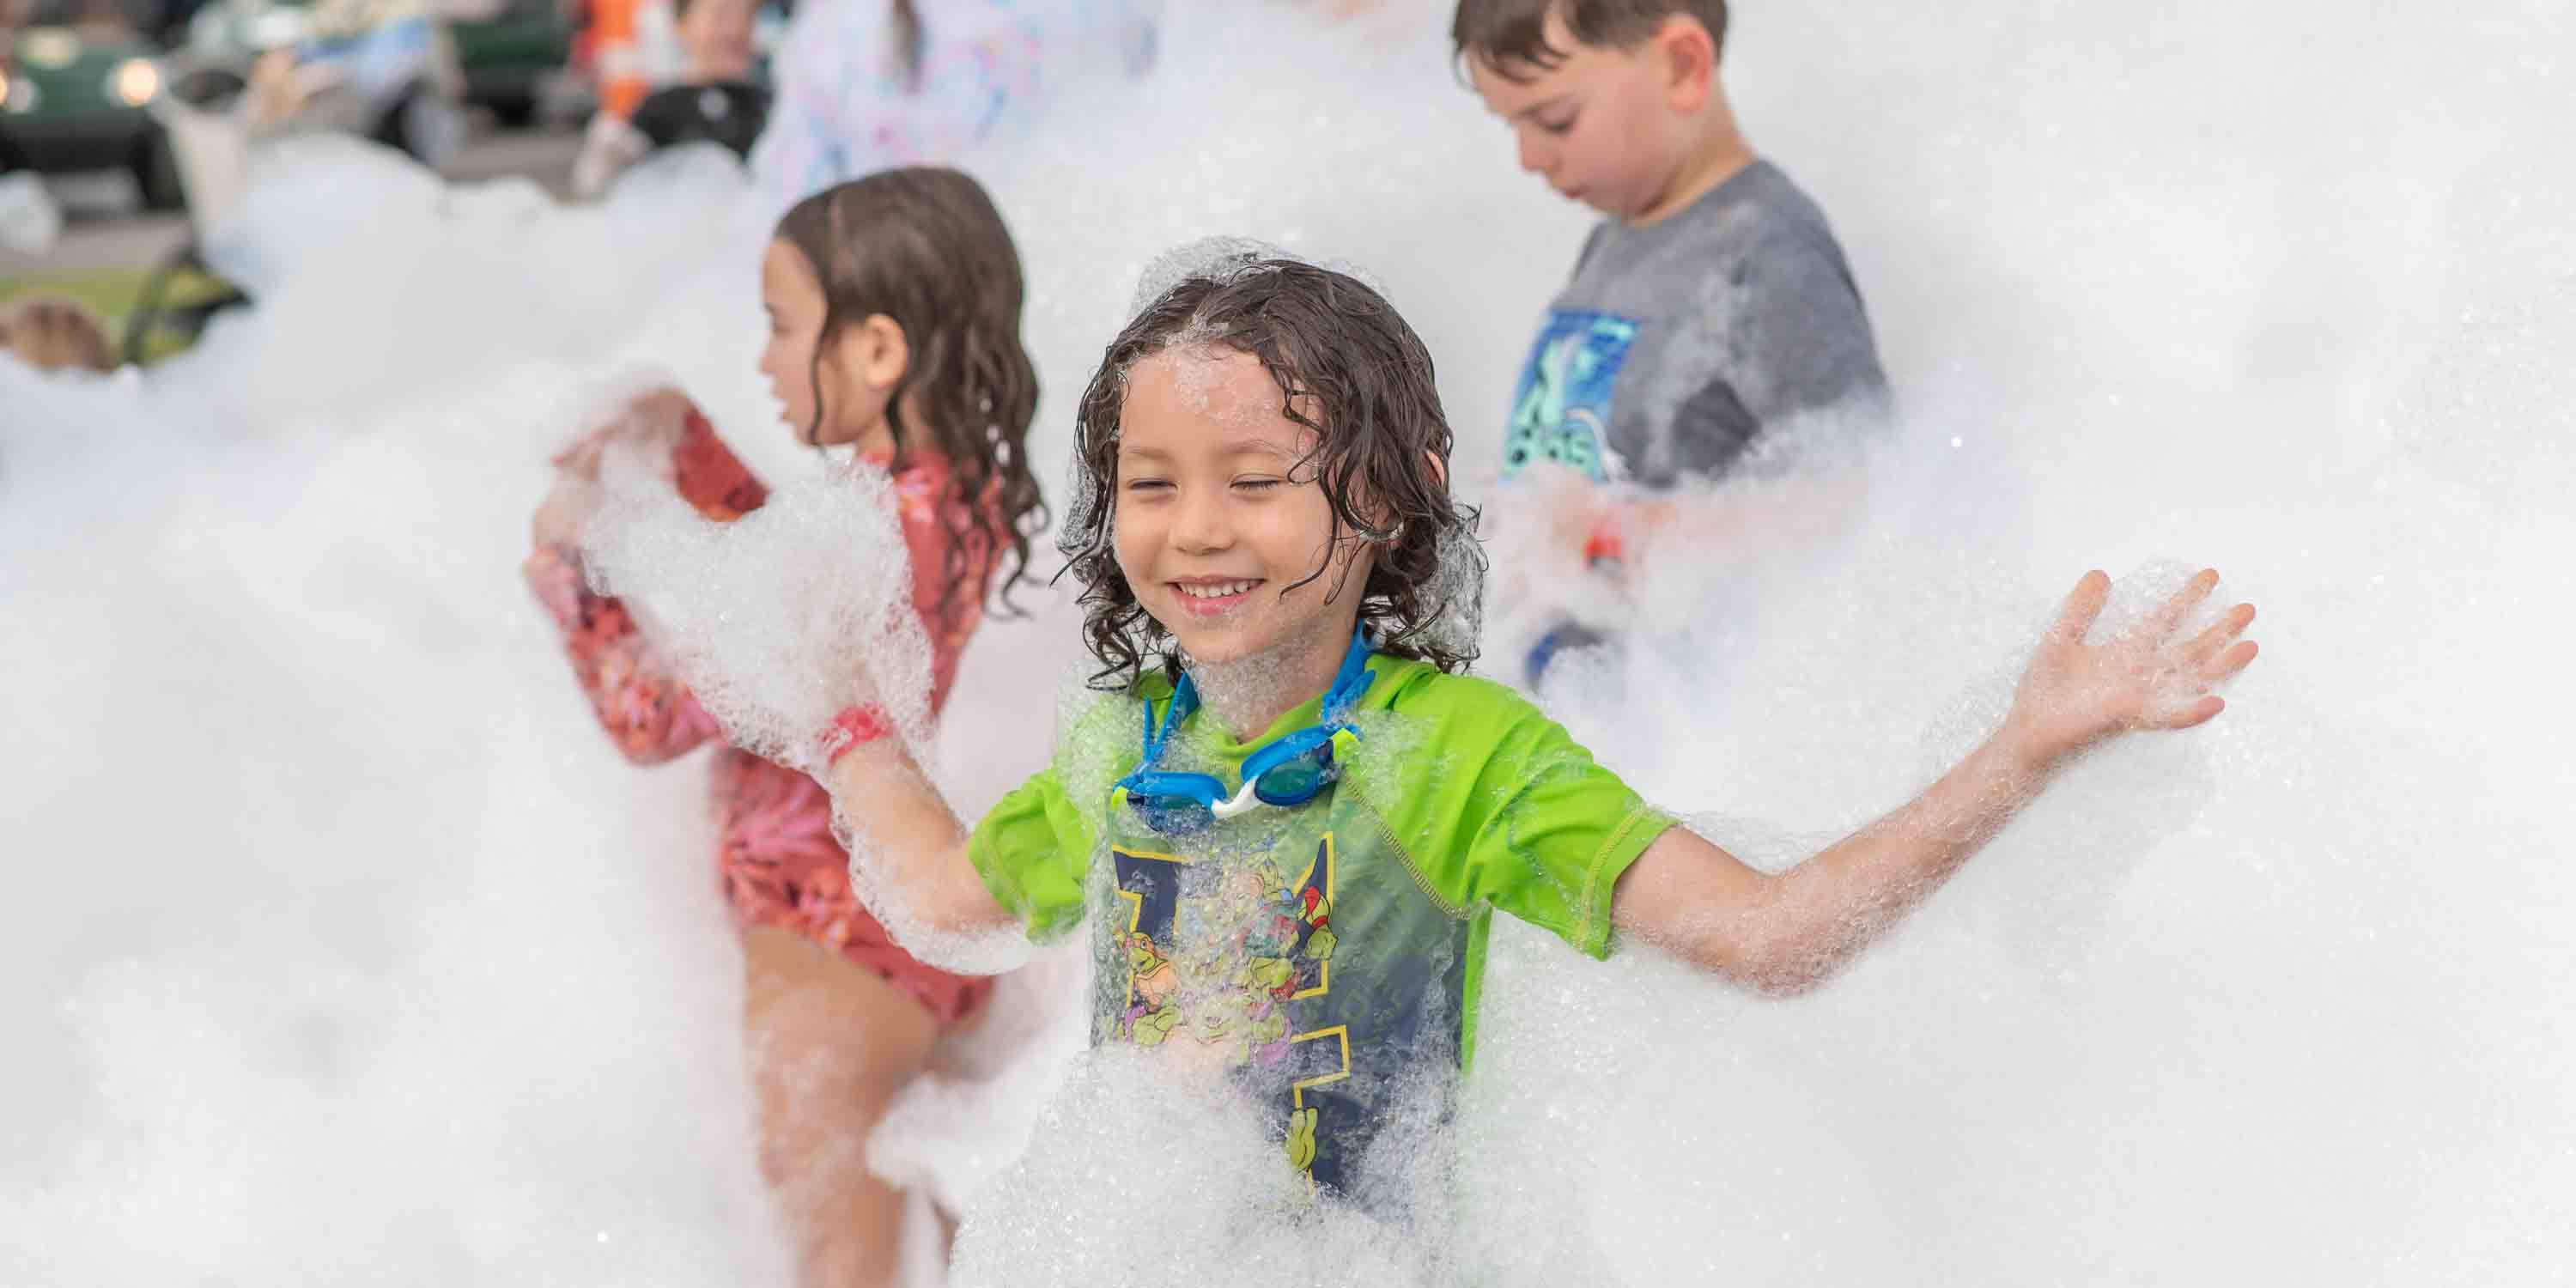 Guests enjoying the foam at a Camp Fimfo Waco foam party